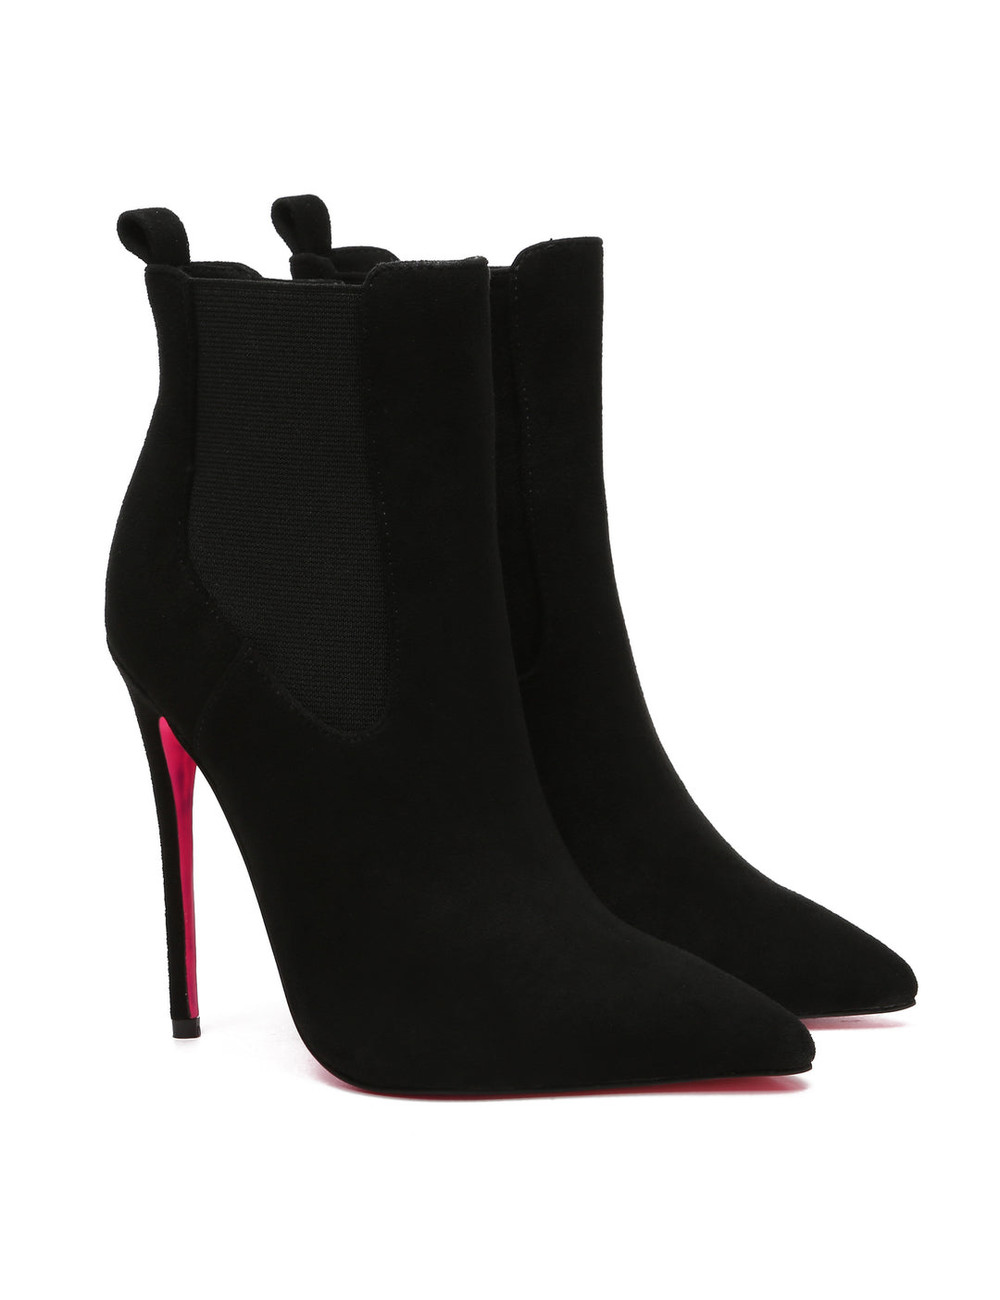 Giaro GLOWING BLACK VELOUR - Shoebidoo Shoes | Giaro high heels